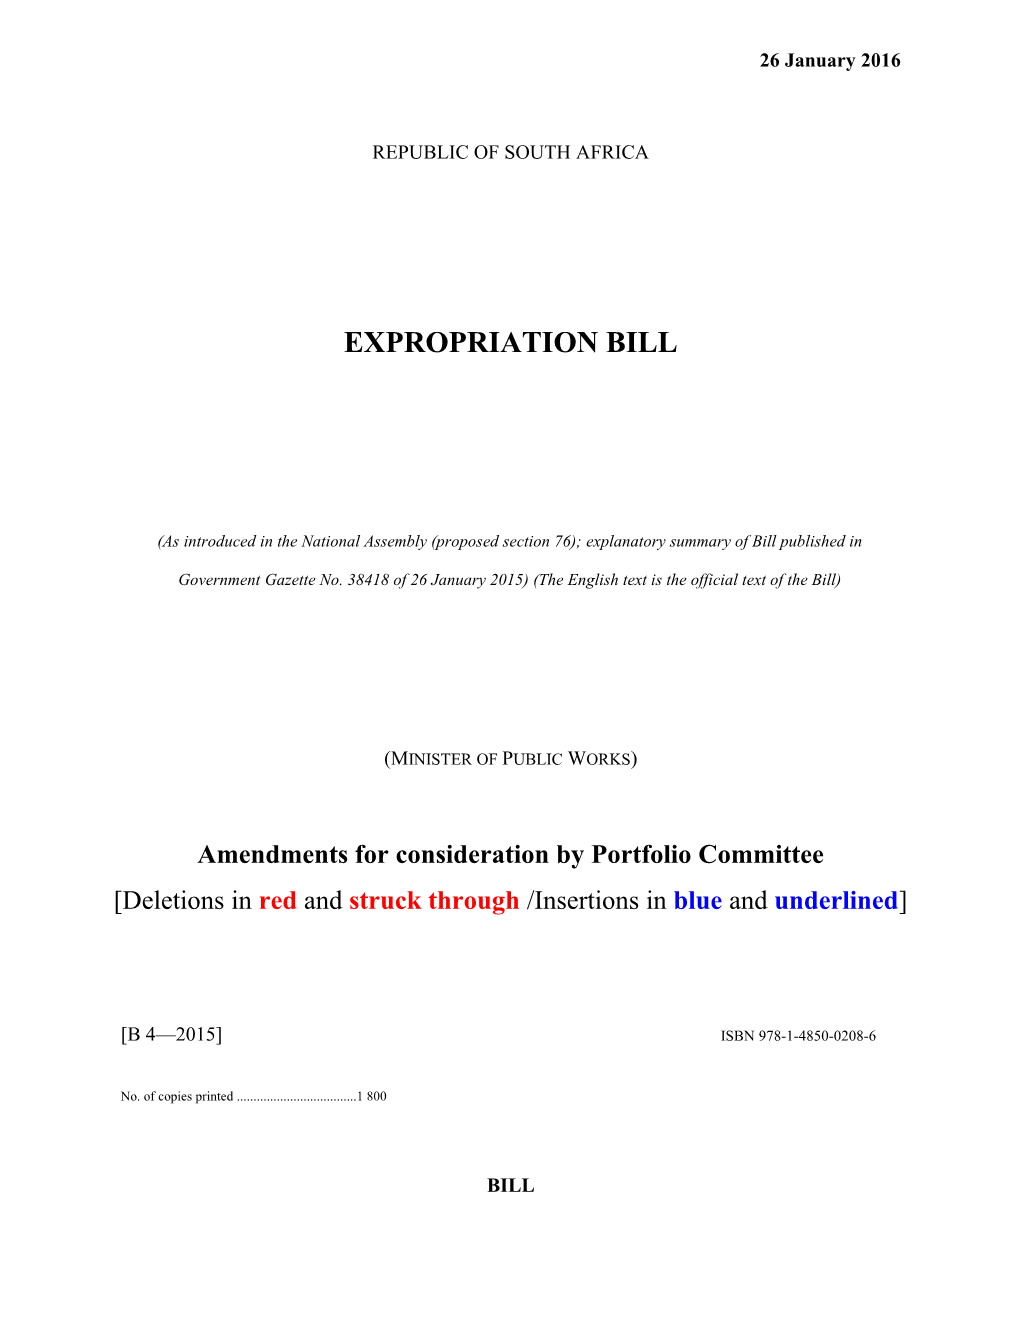 Expropriation Bill